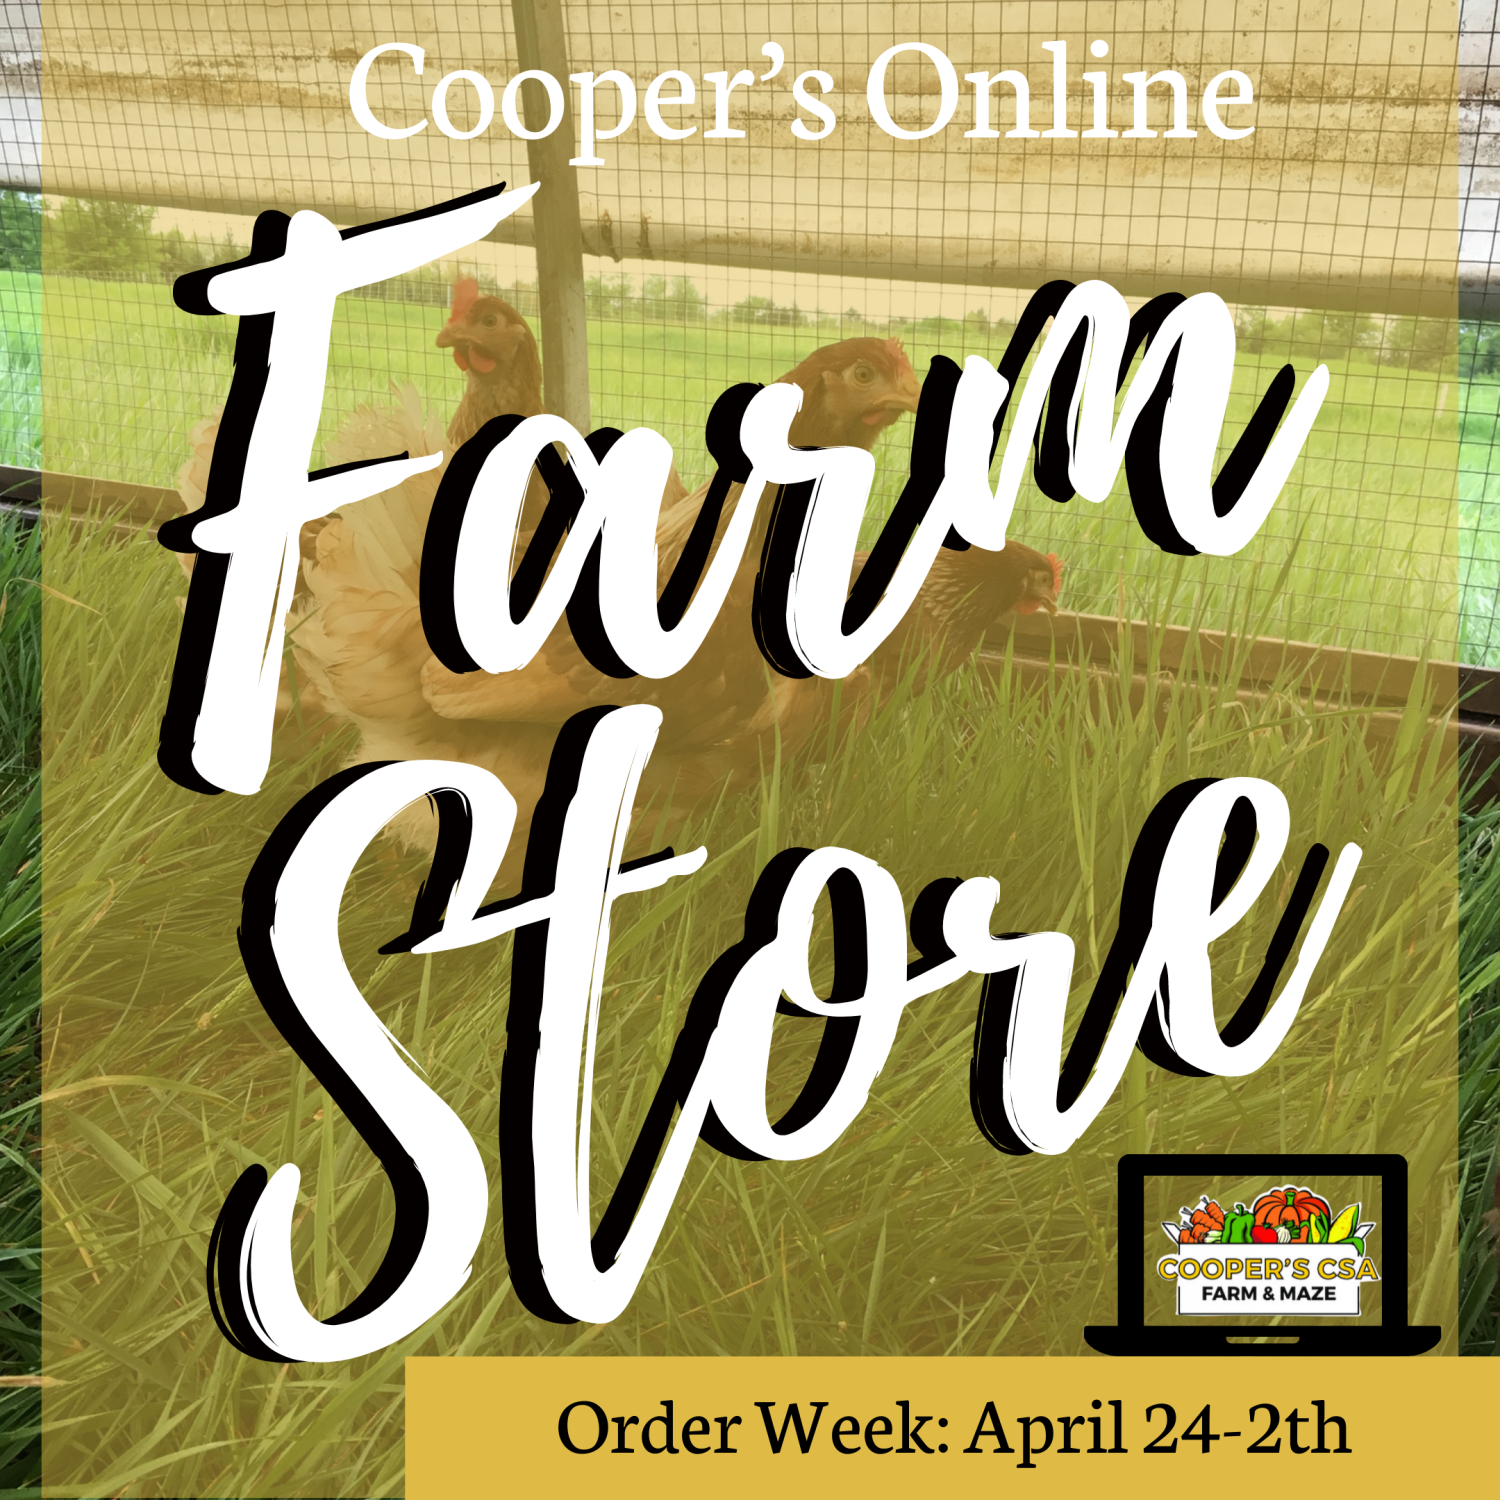 Next Happening: Coopers CSA Online FarmStore- Order Week April 24-27th